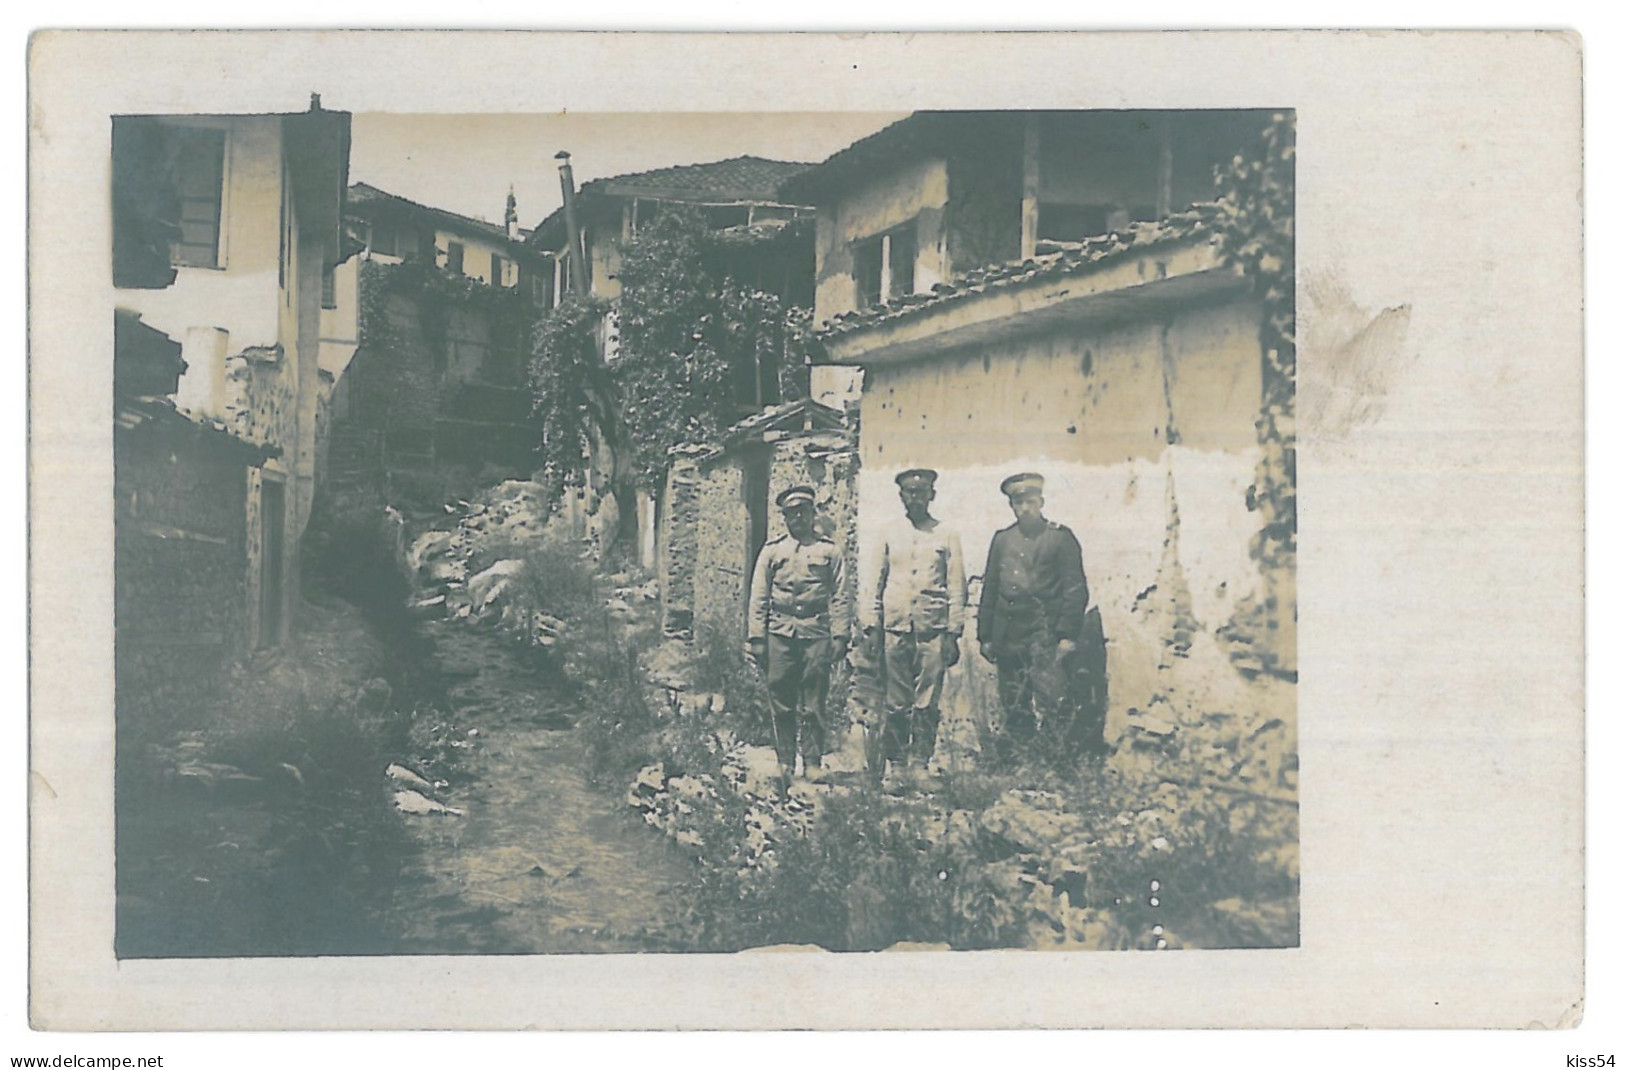 RO 06 - 15002 CONSTANTA, Military, Romania - Old Postcard, Real PHOTO - Unused - 1916 - Romania